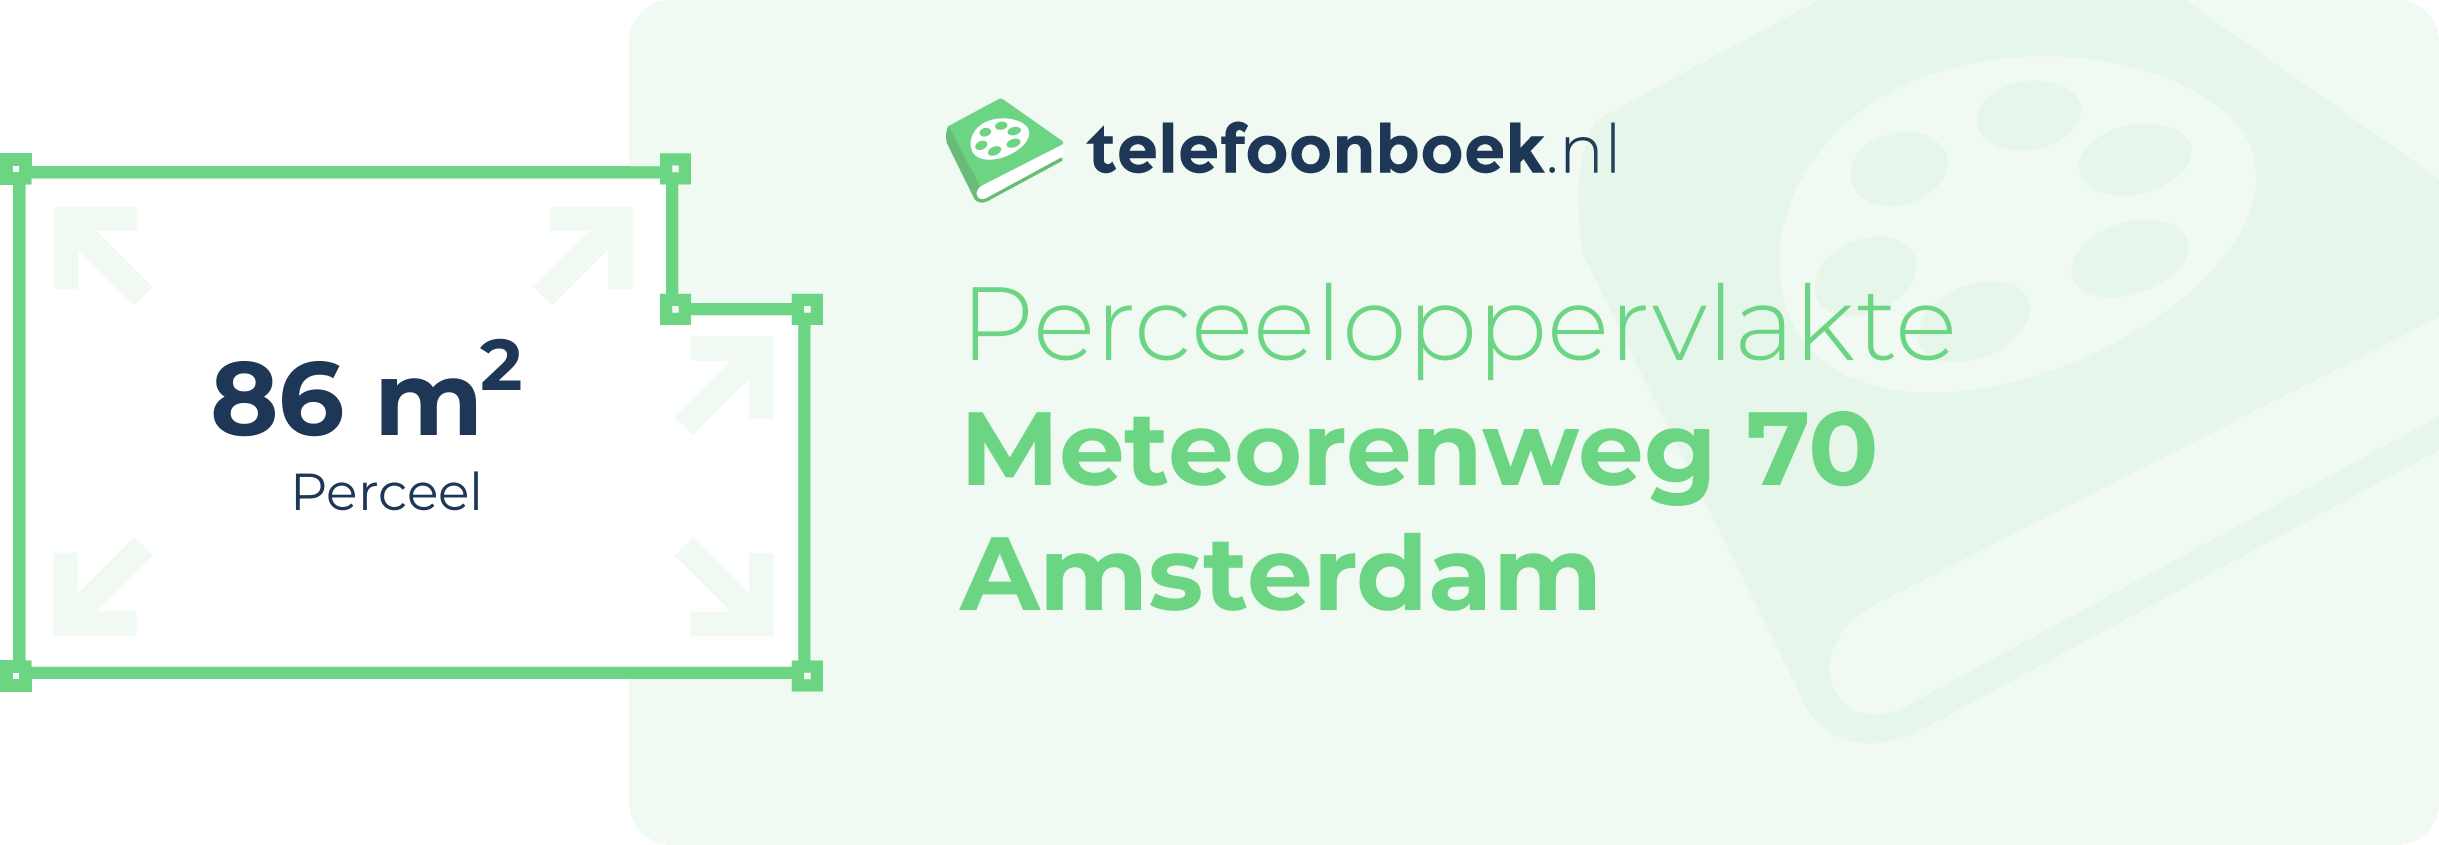 Perceeloppervlakte Meteorenweg 70 Amsterdam